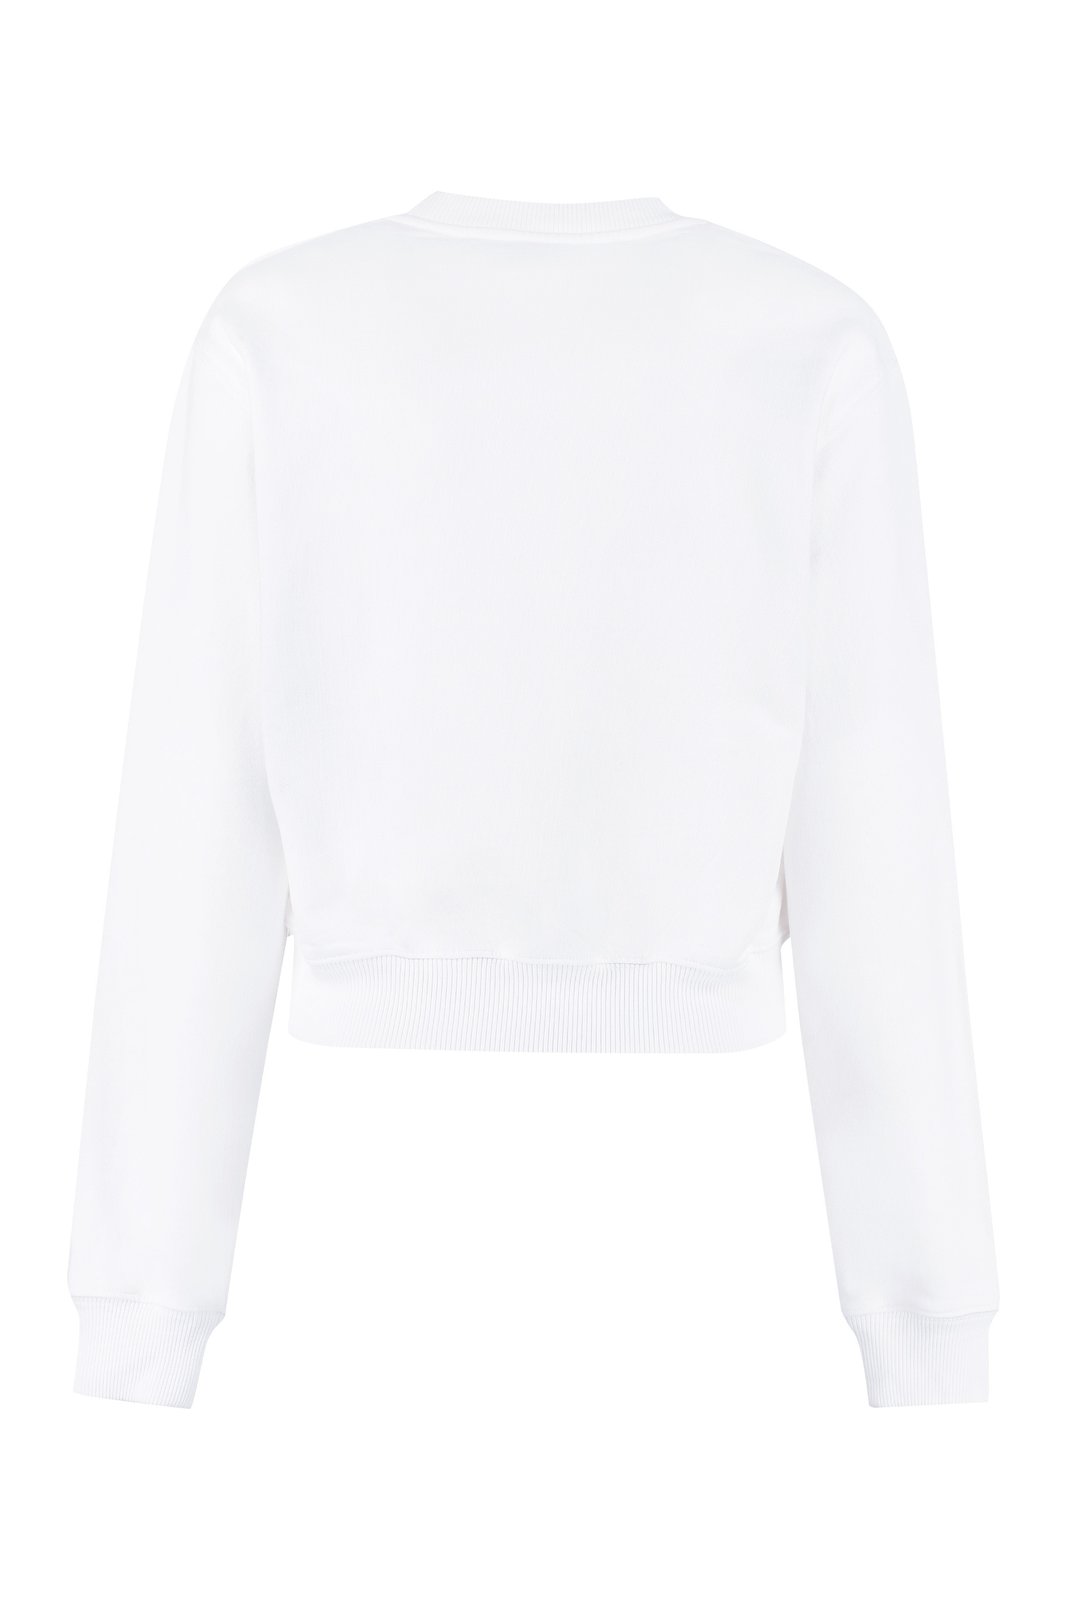 Off-White Logo Printed Crewneck Sweater